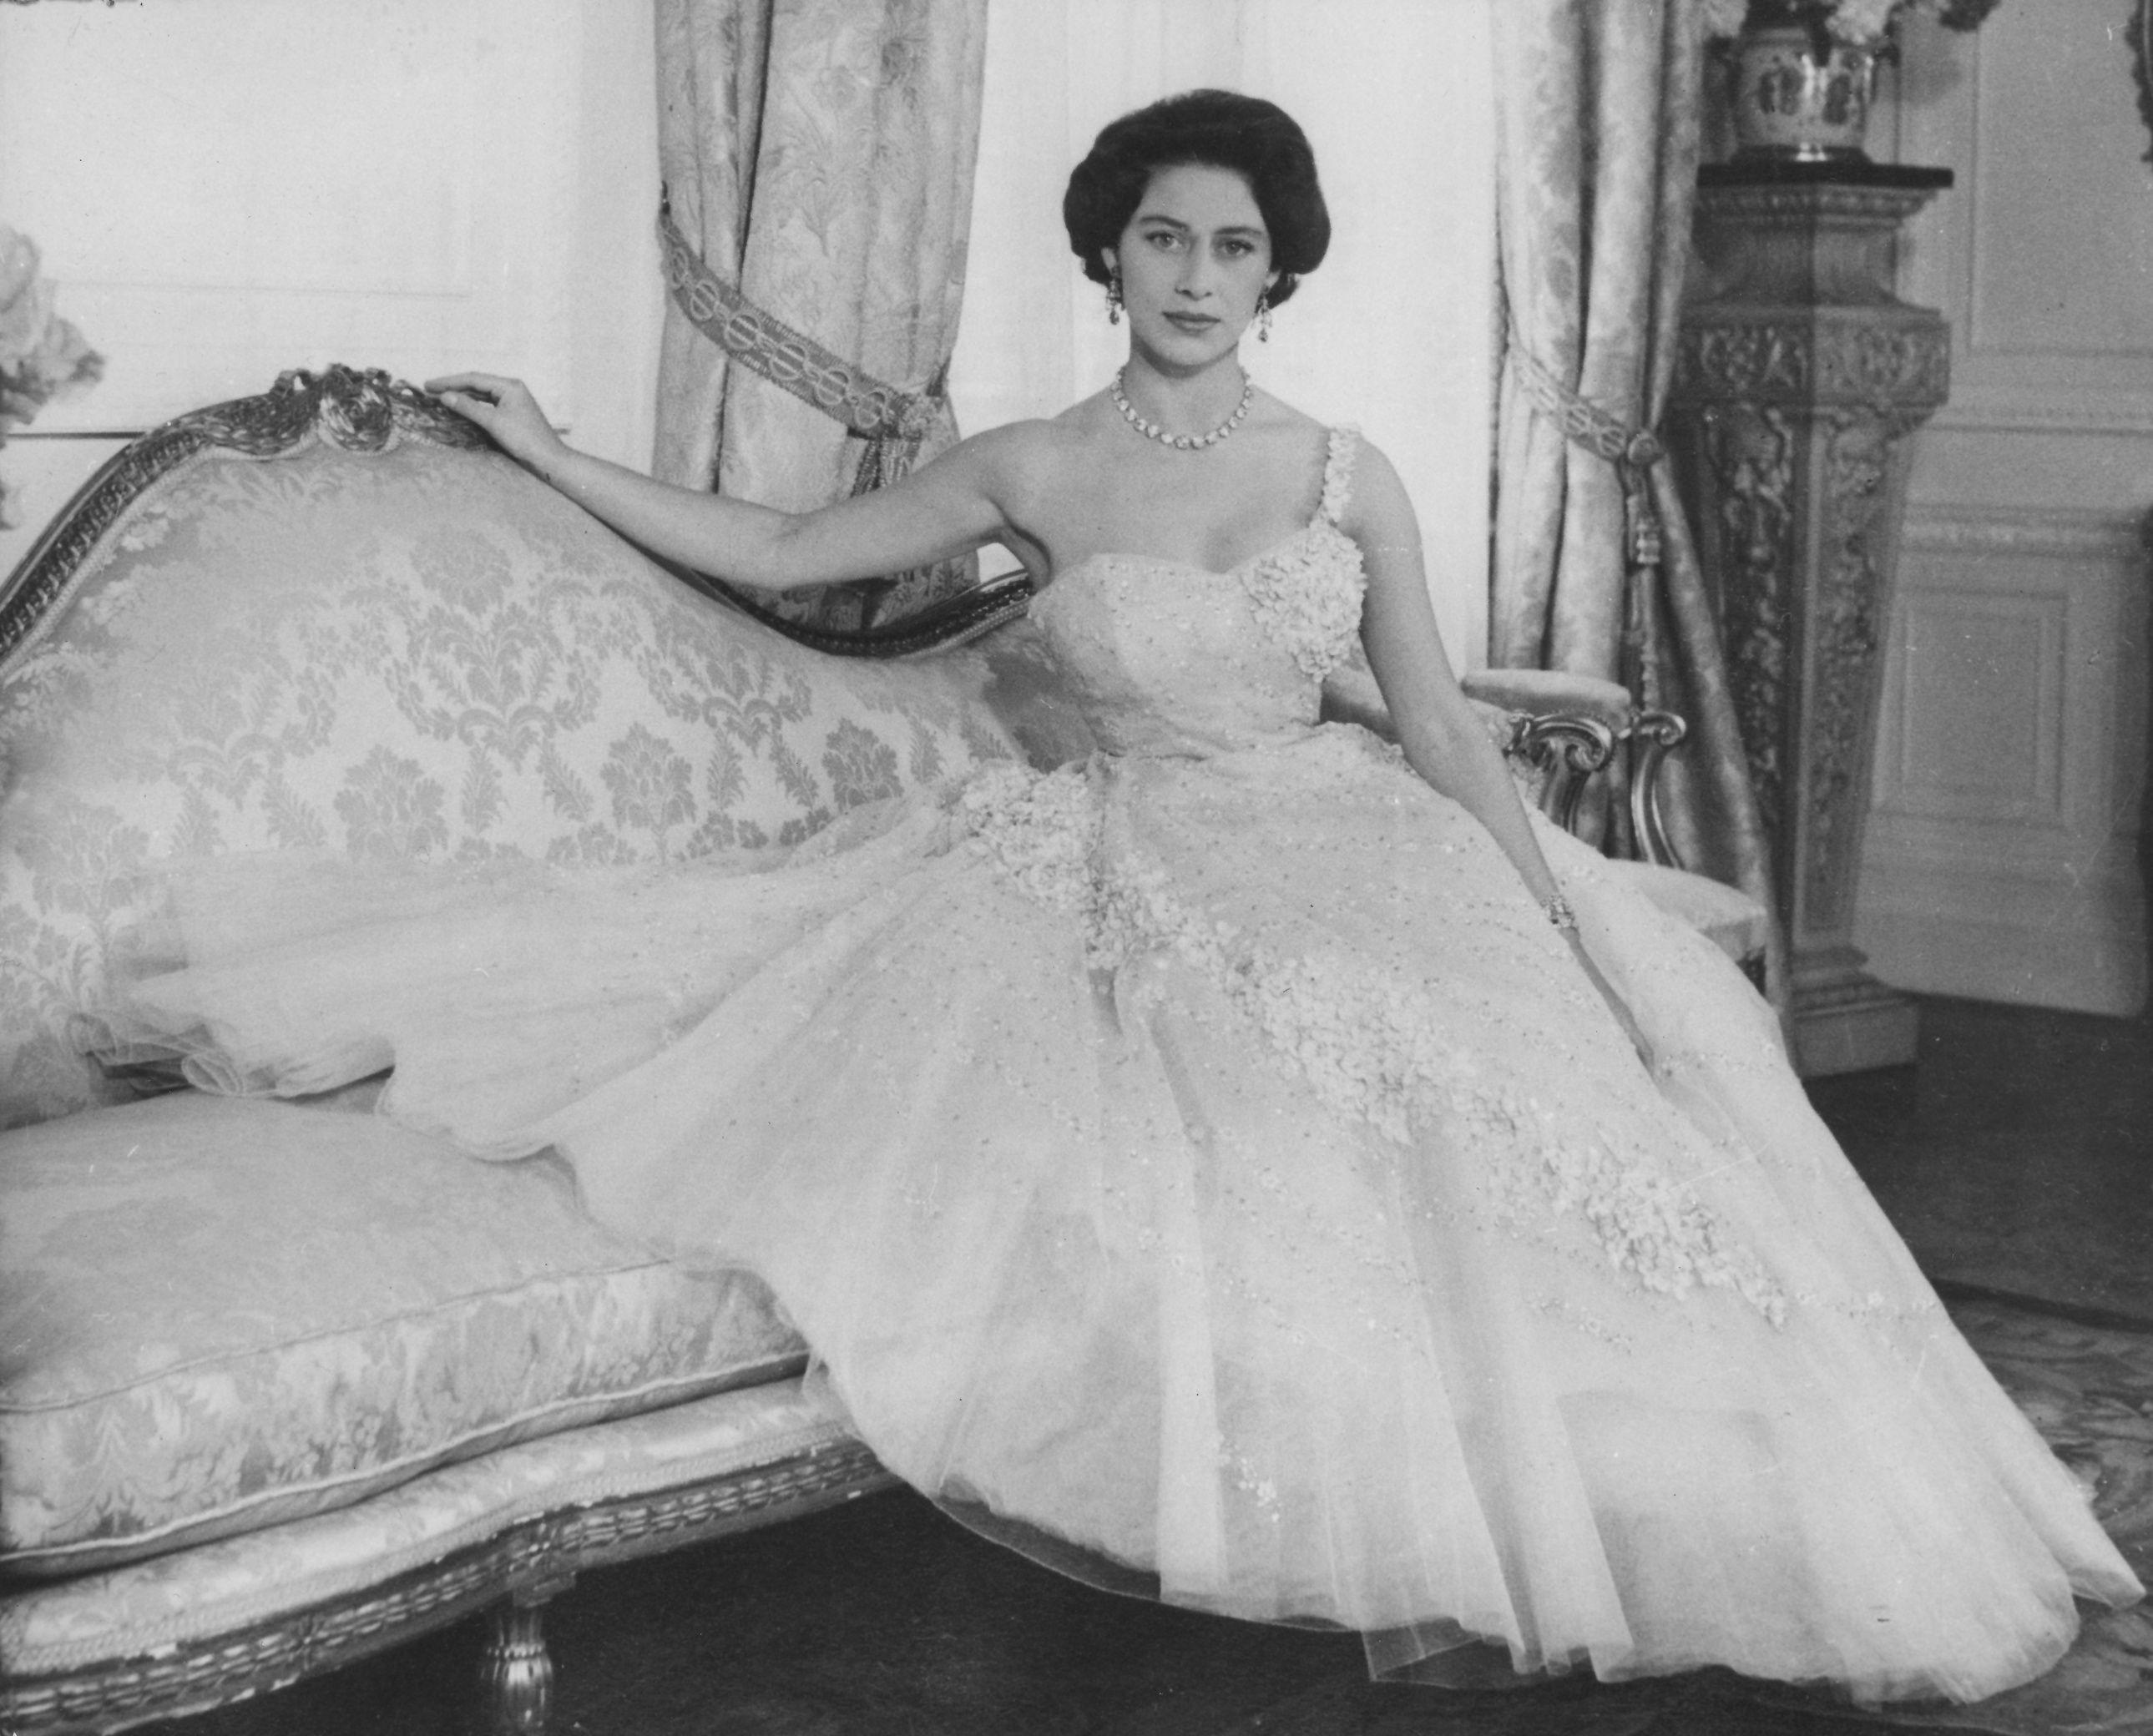 Queen Elizabeth Princess Margaret Wedding Dress - Article Blog